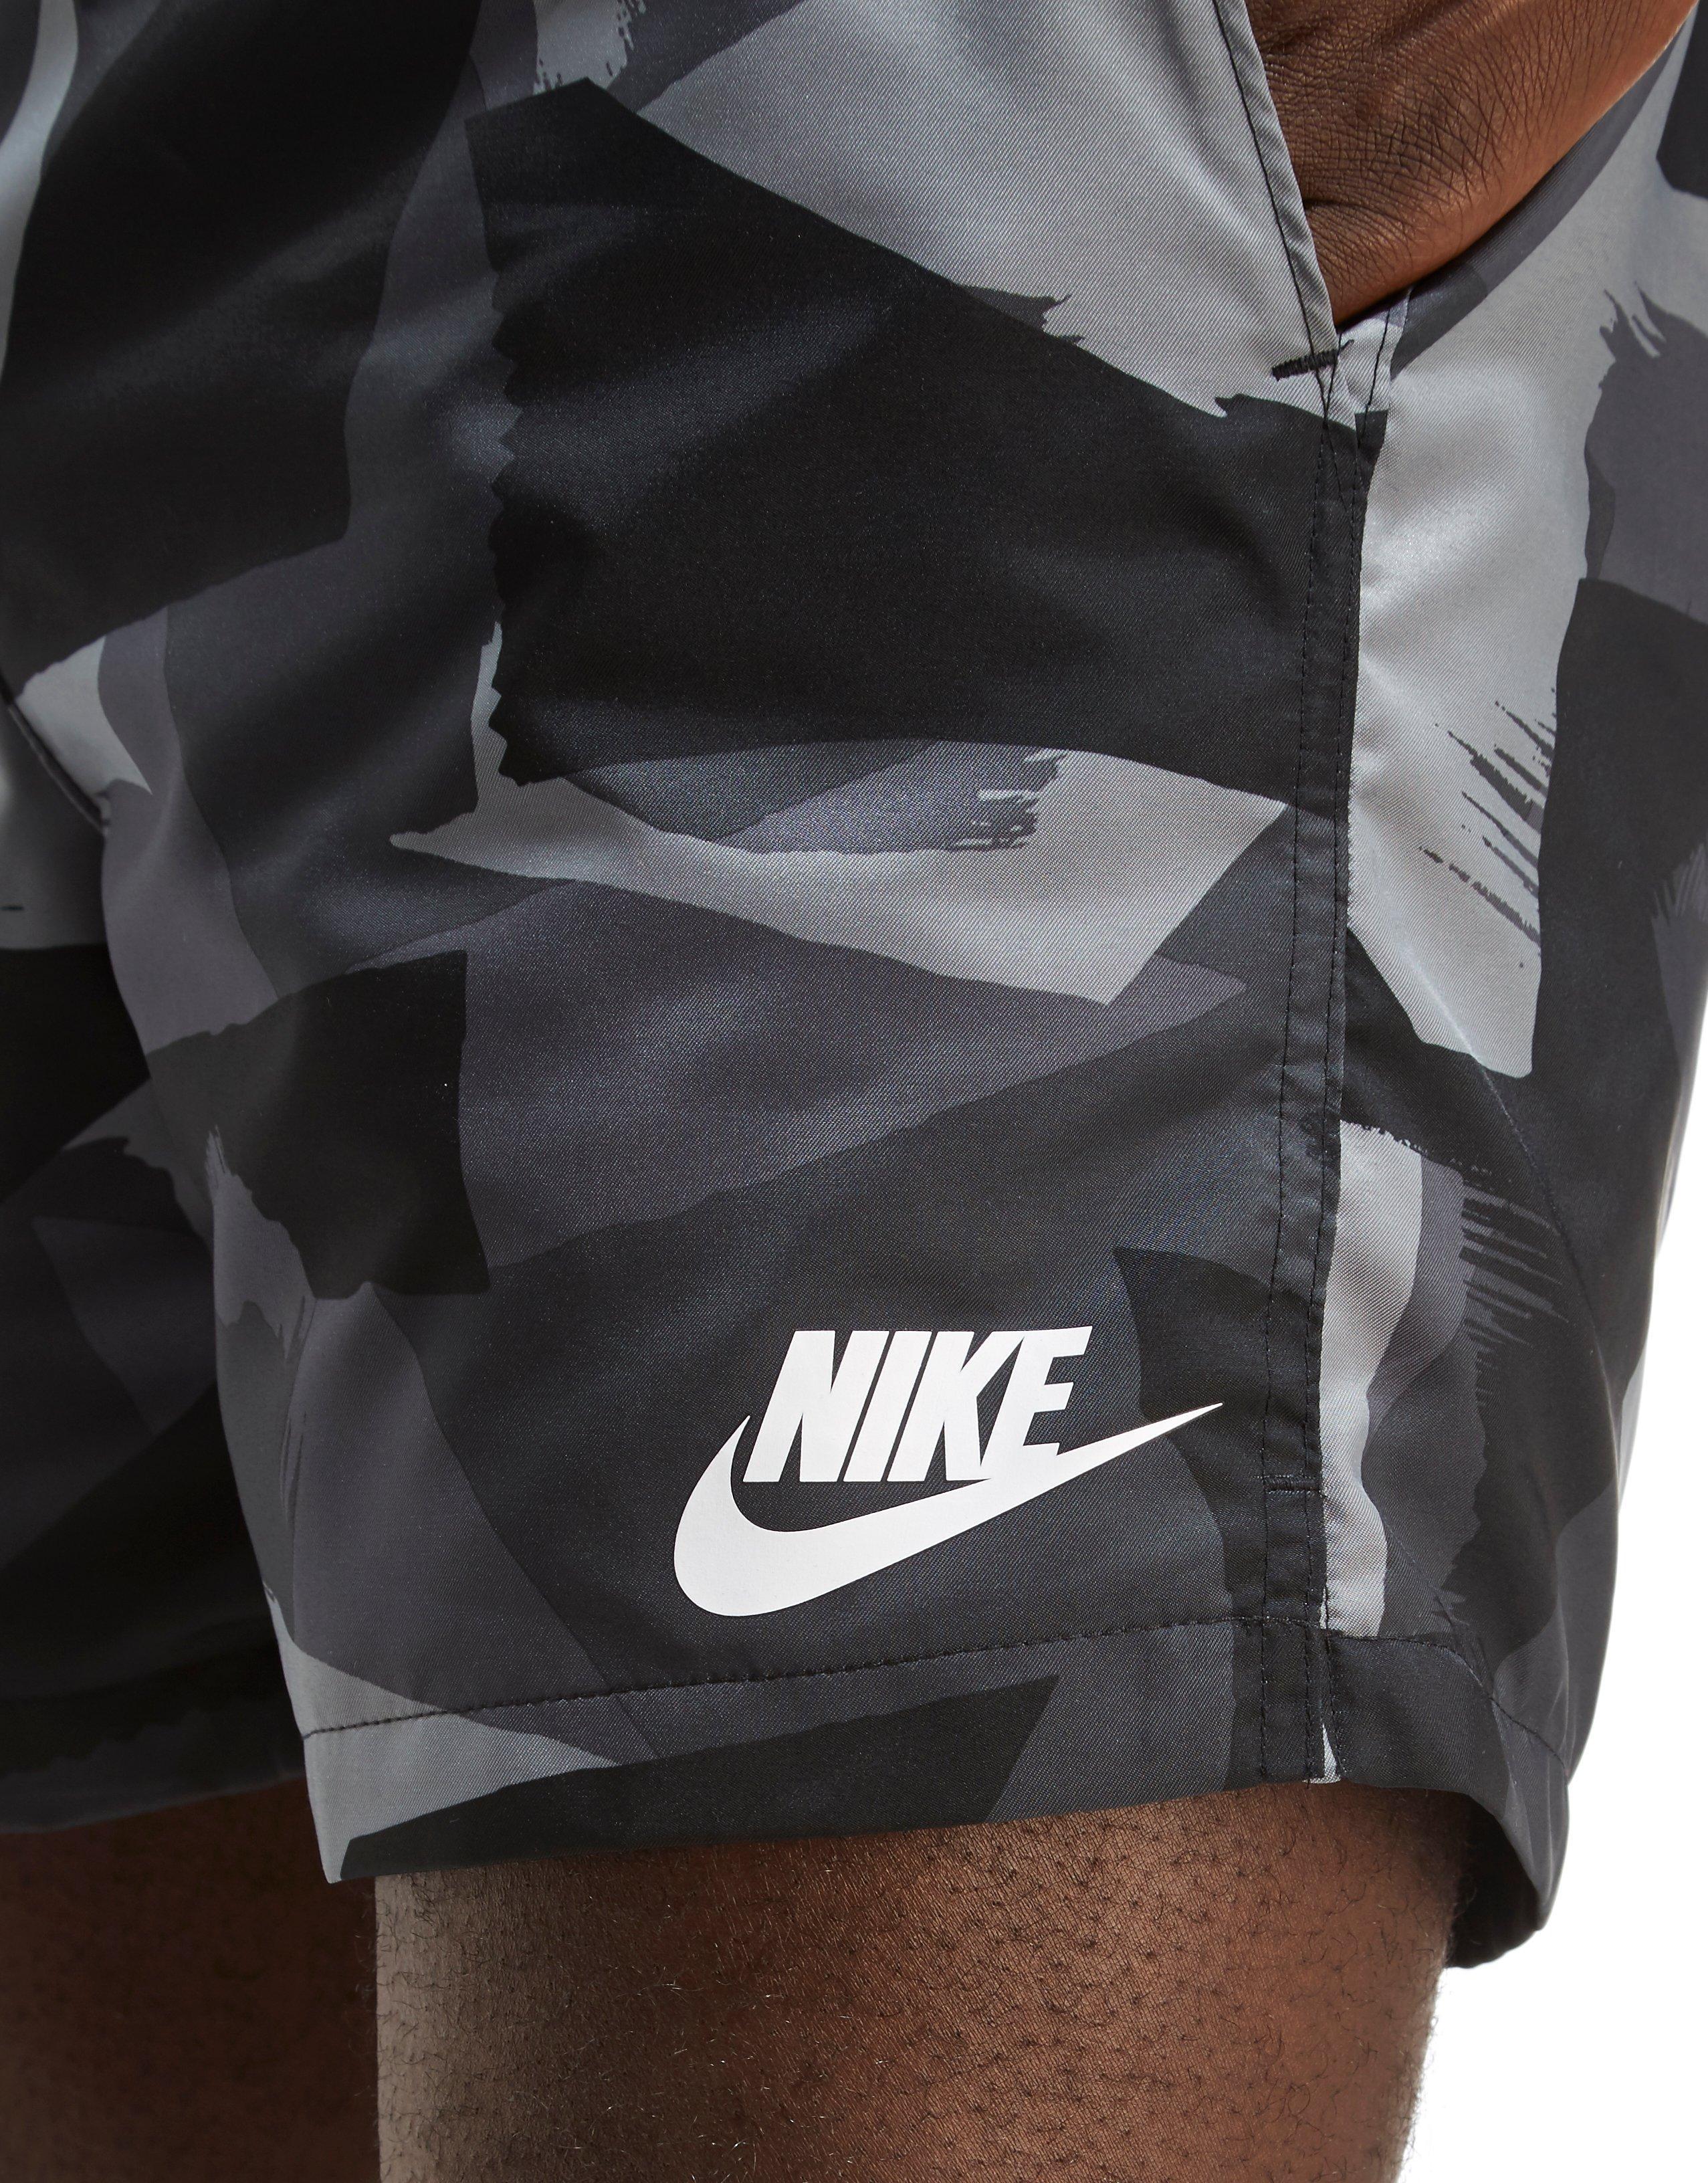 Lyst - Nike Camo Swim Shorts in Gray for Men